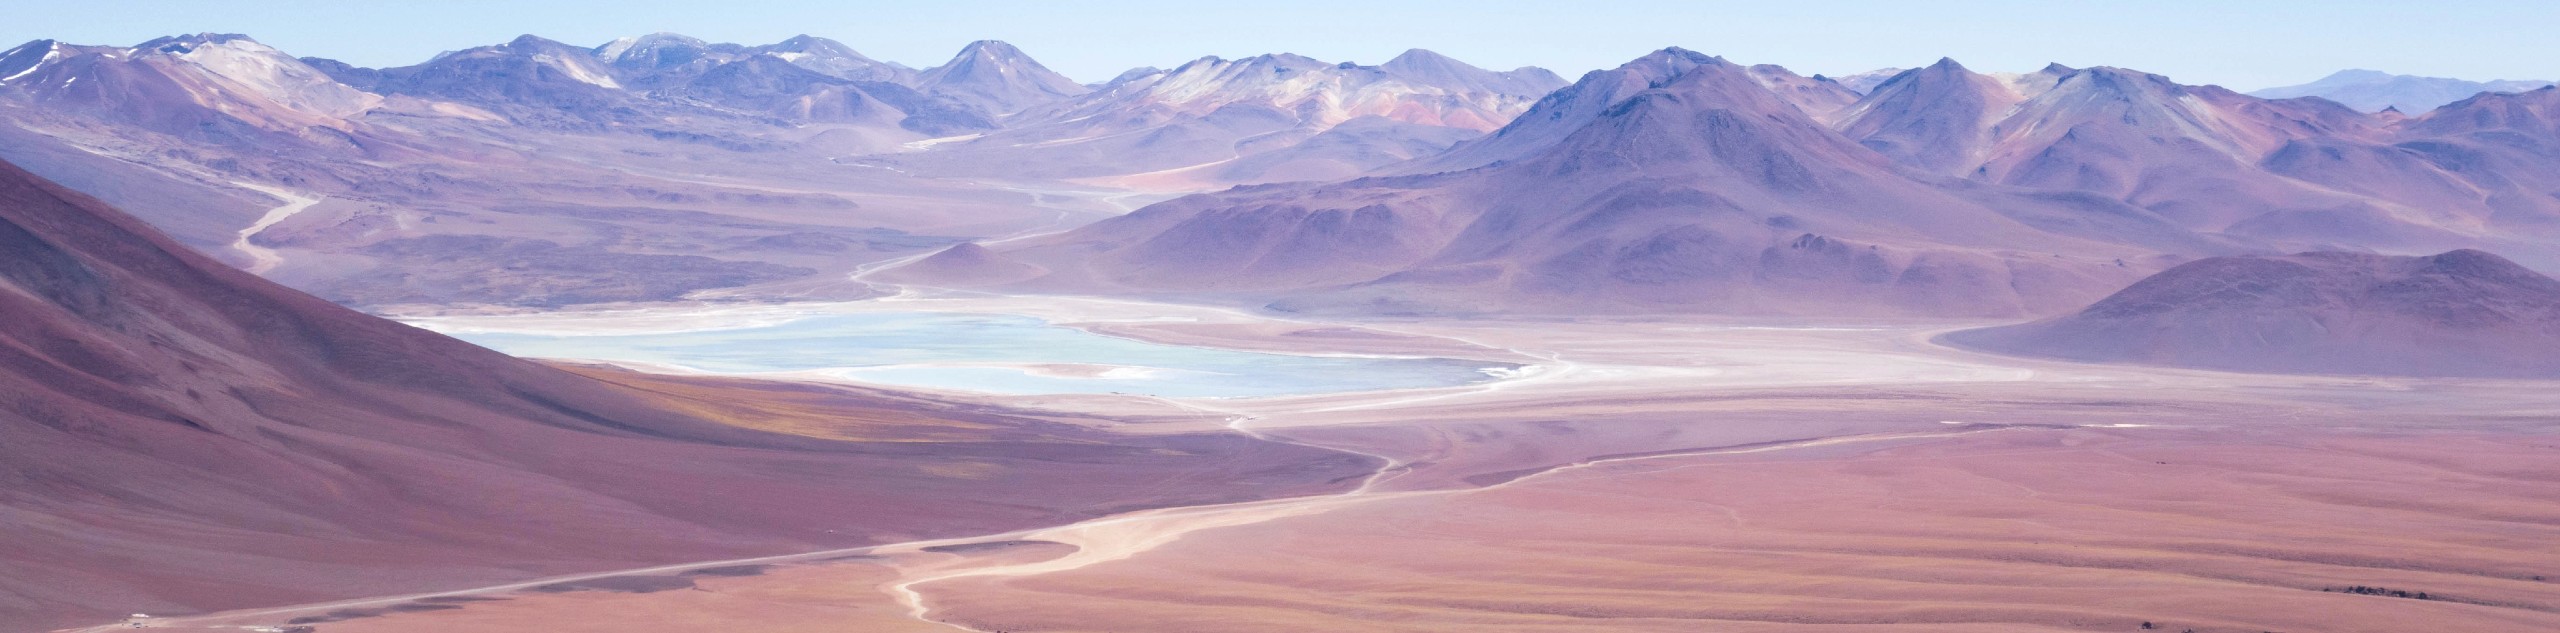 Atacama Desert views